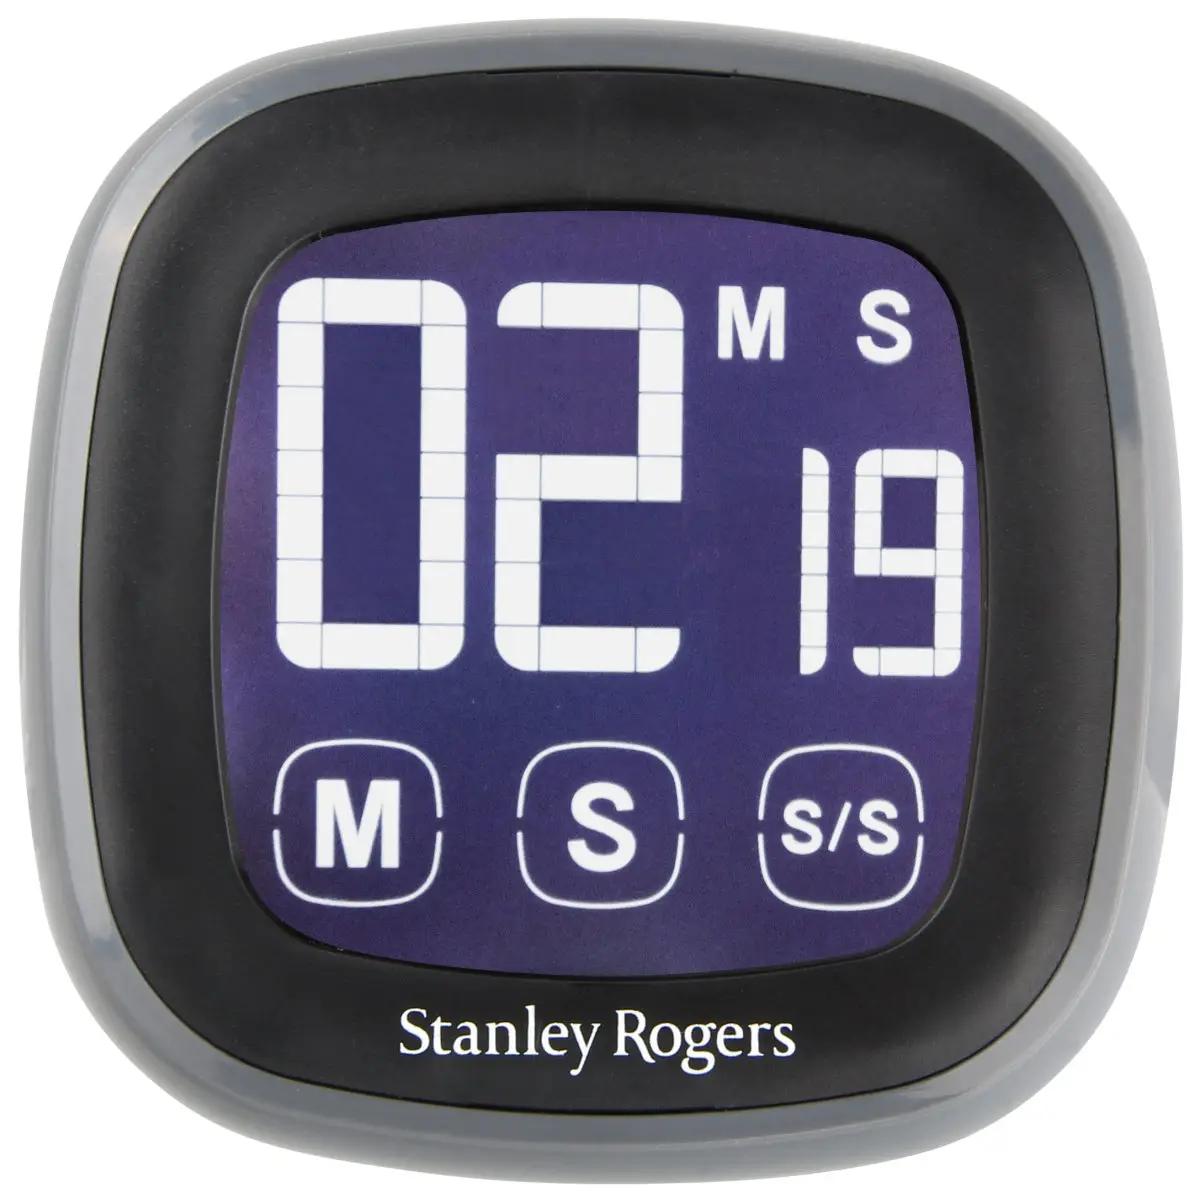 Stanley Rogers LED-Touch-Kurzzeitwecker